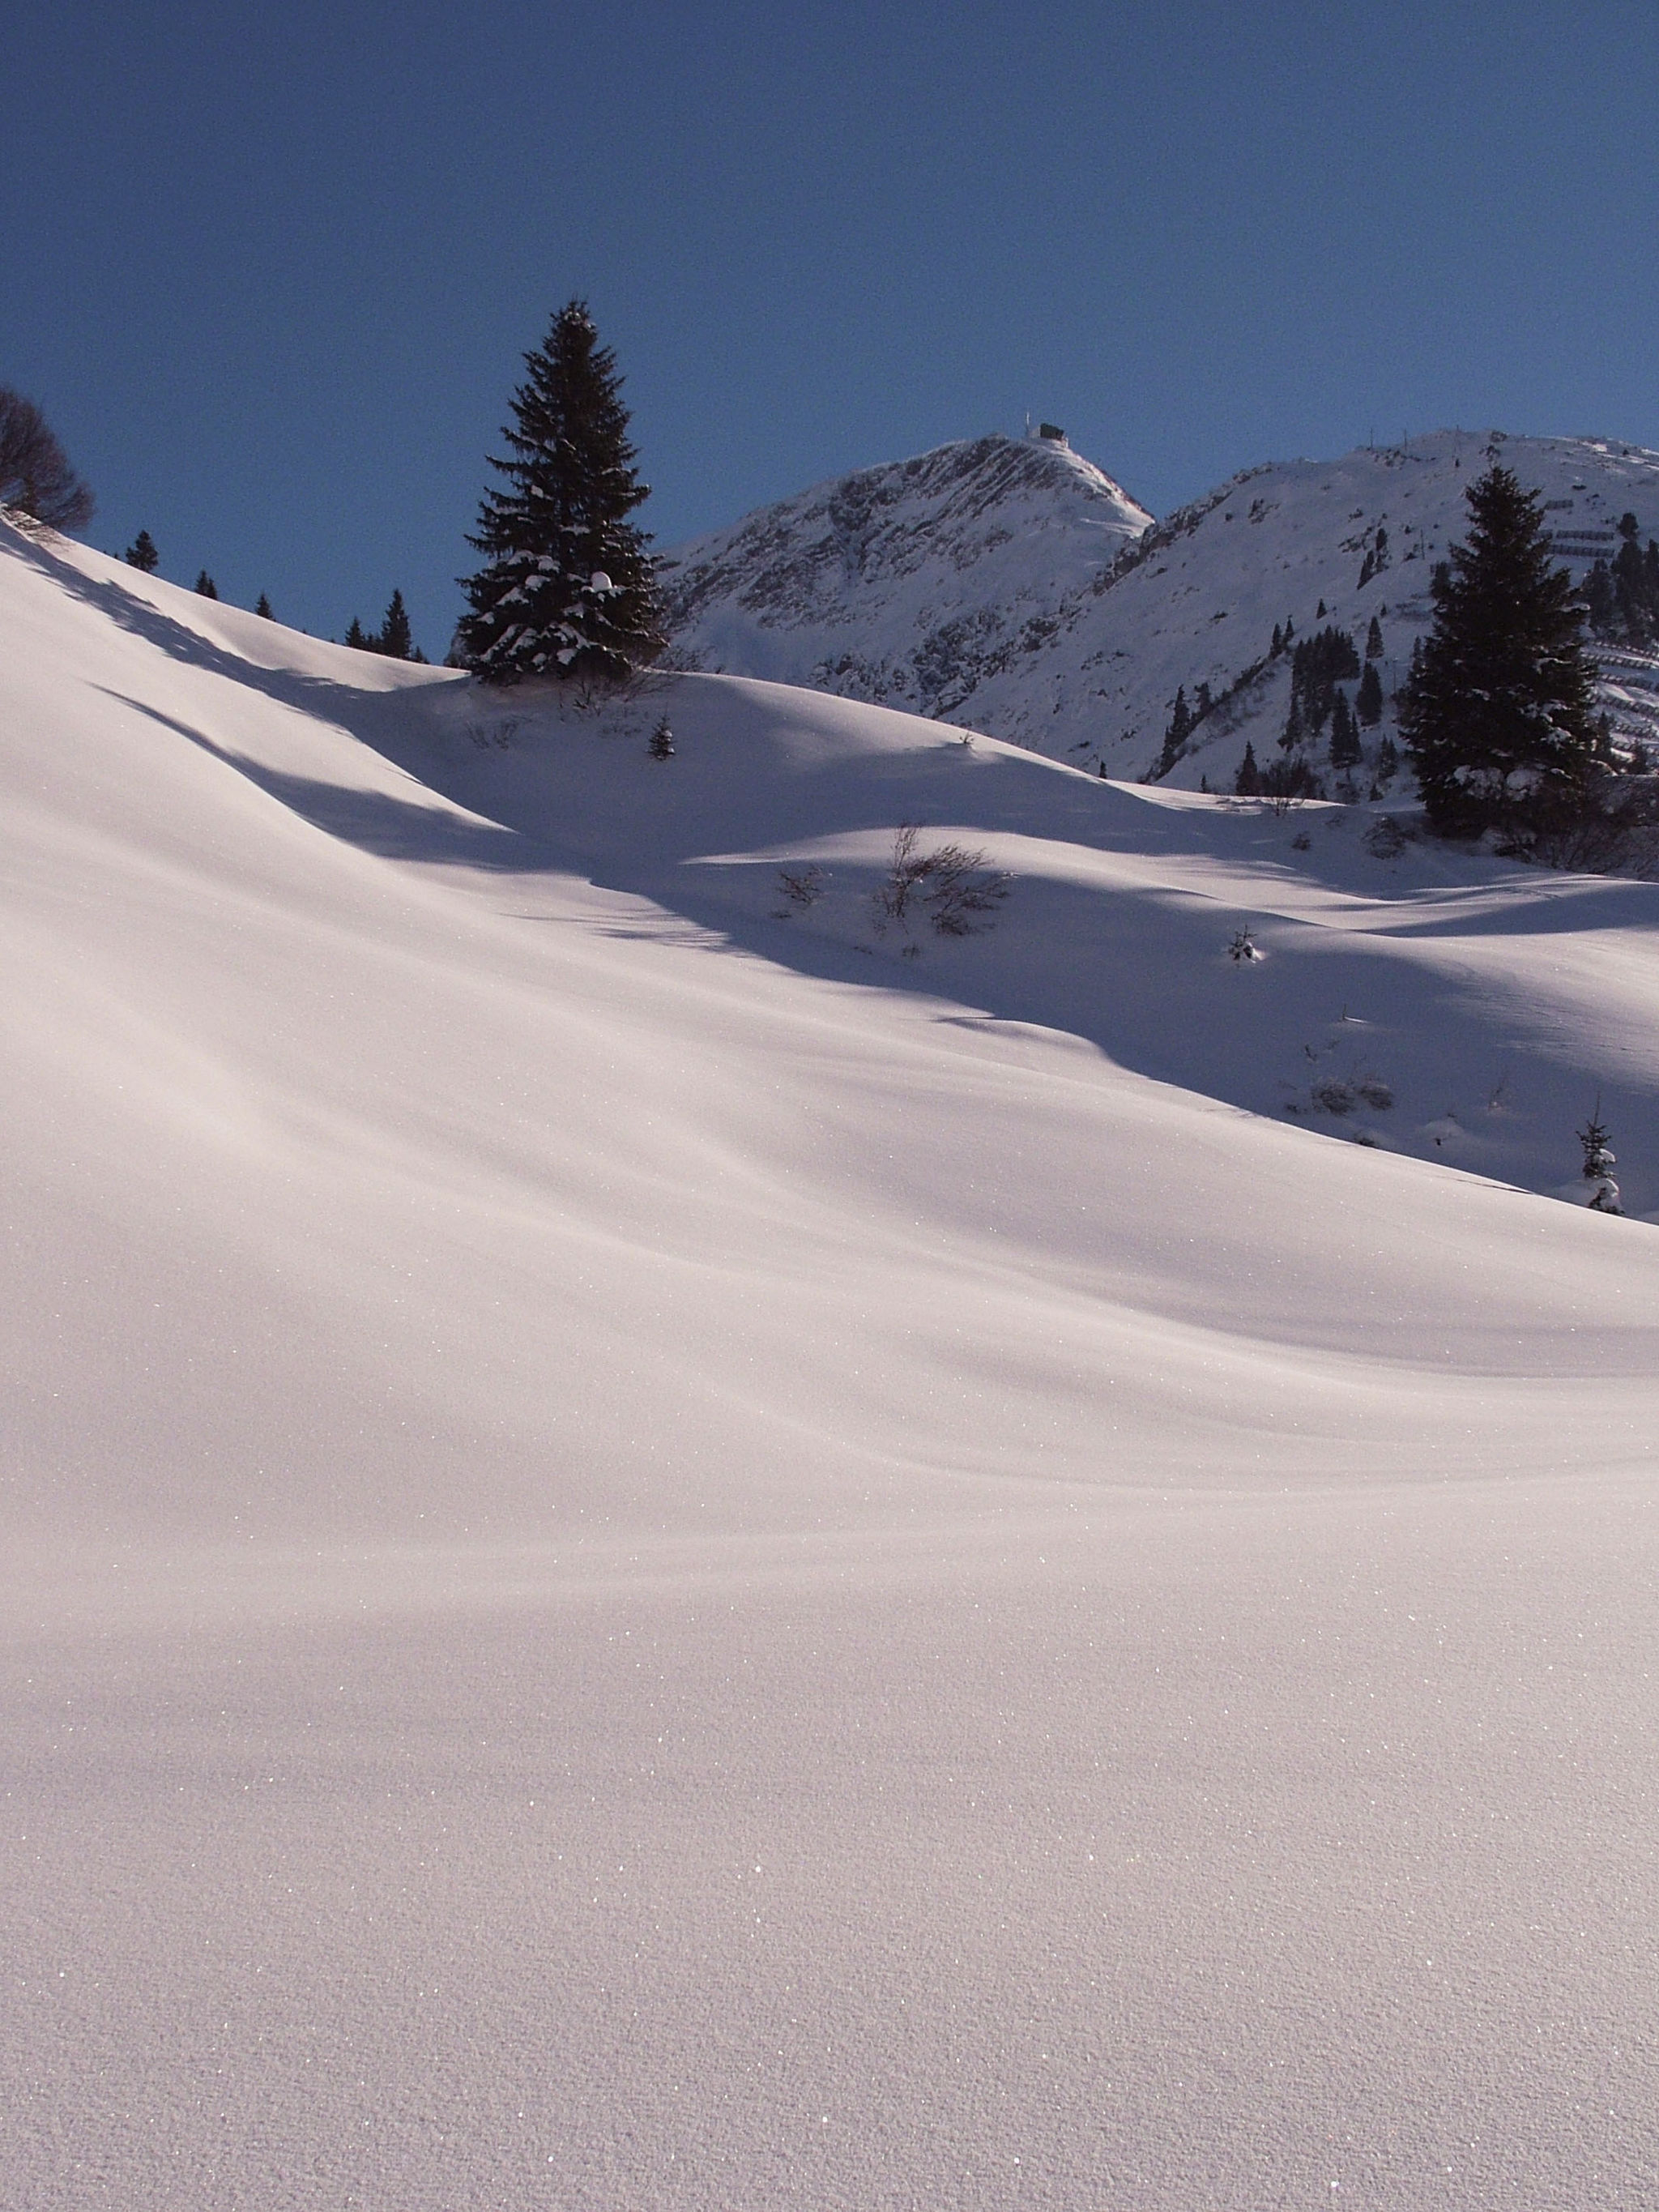 Lech am Arlberg with some January powder